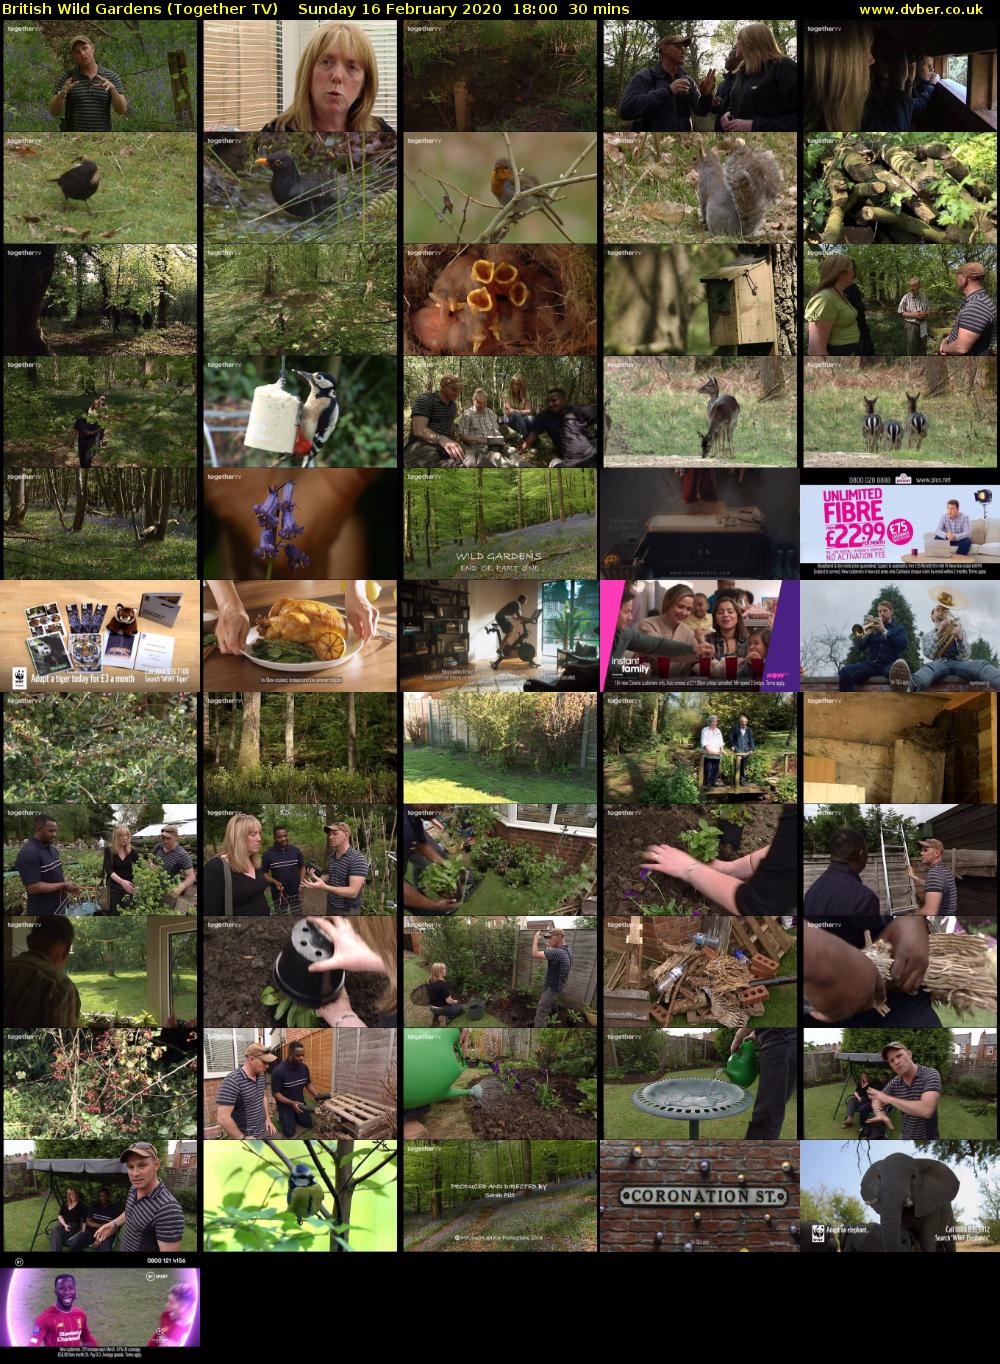 British Wild Gardens (Together TV) Sunday 16 February 2020 18:00 - 18:30